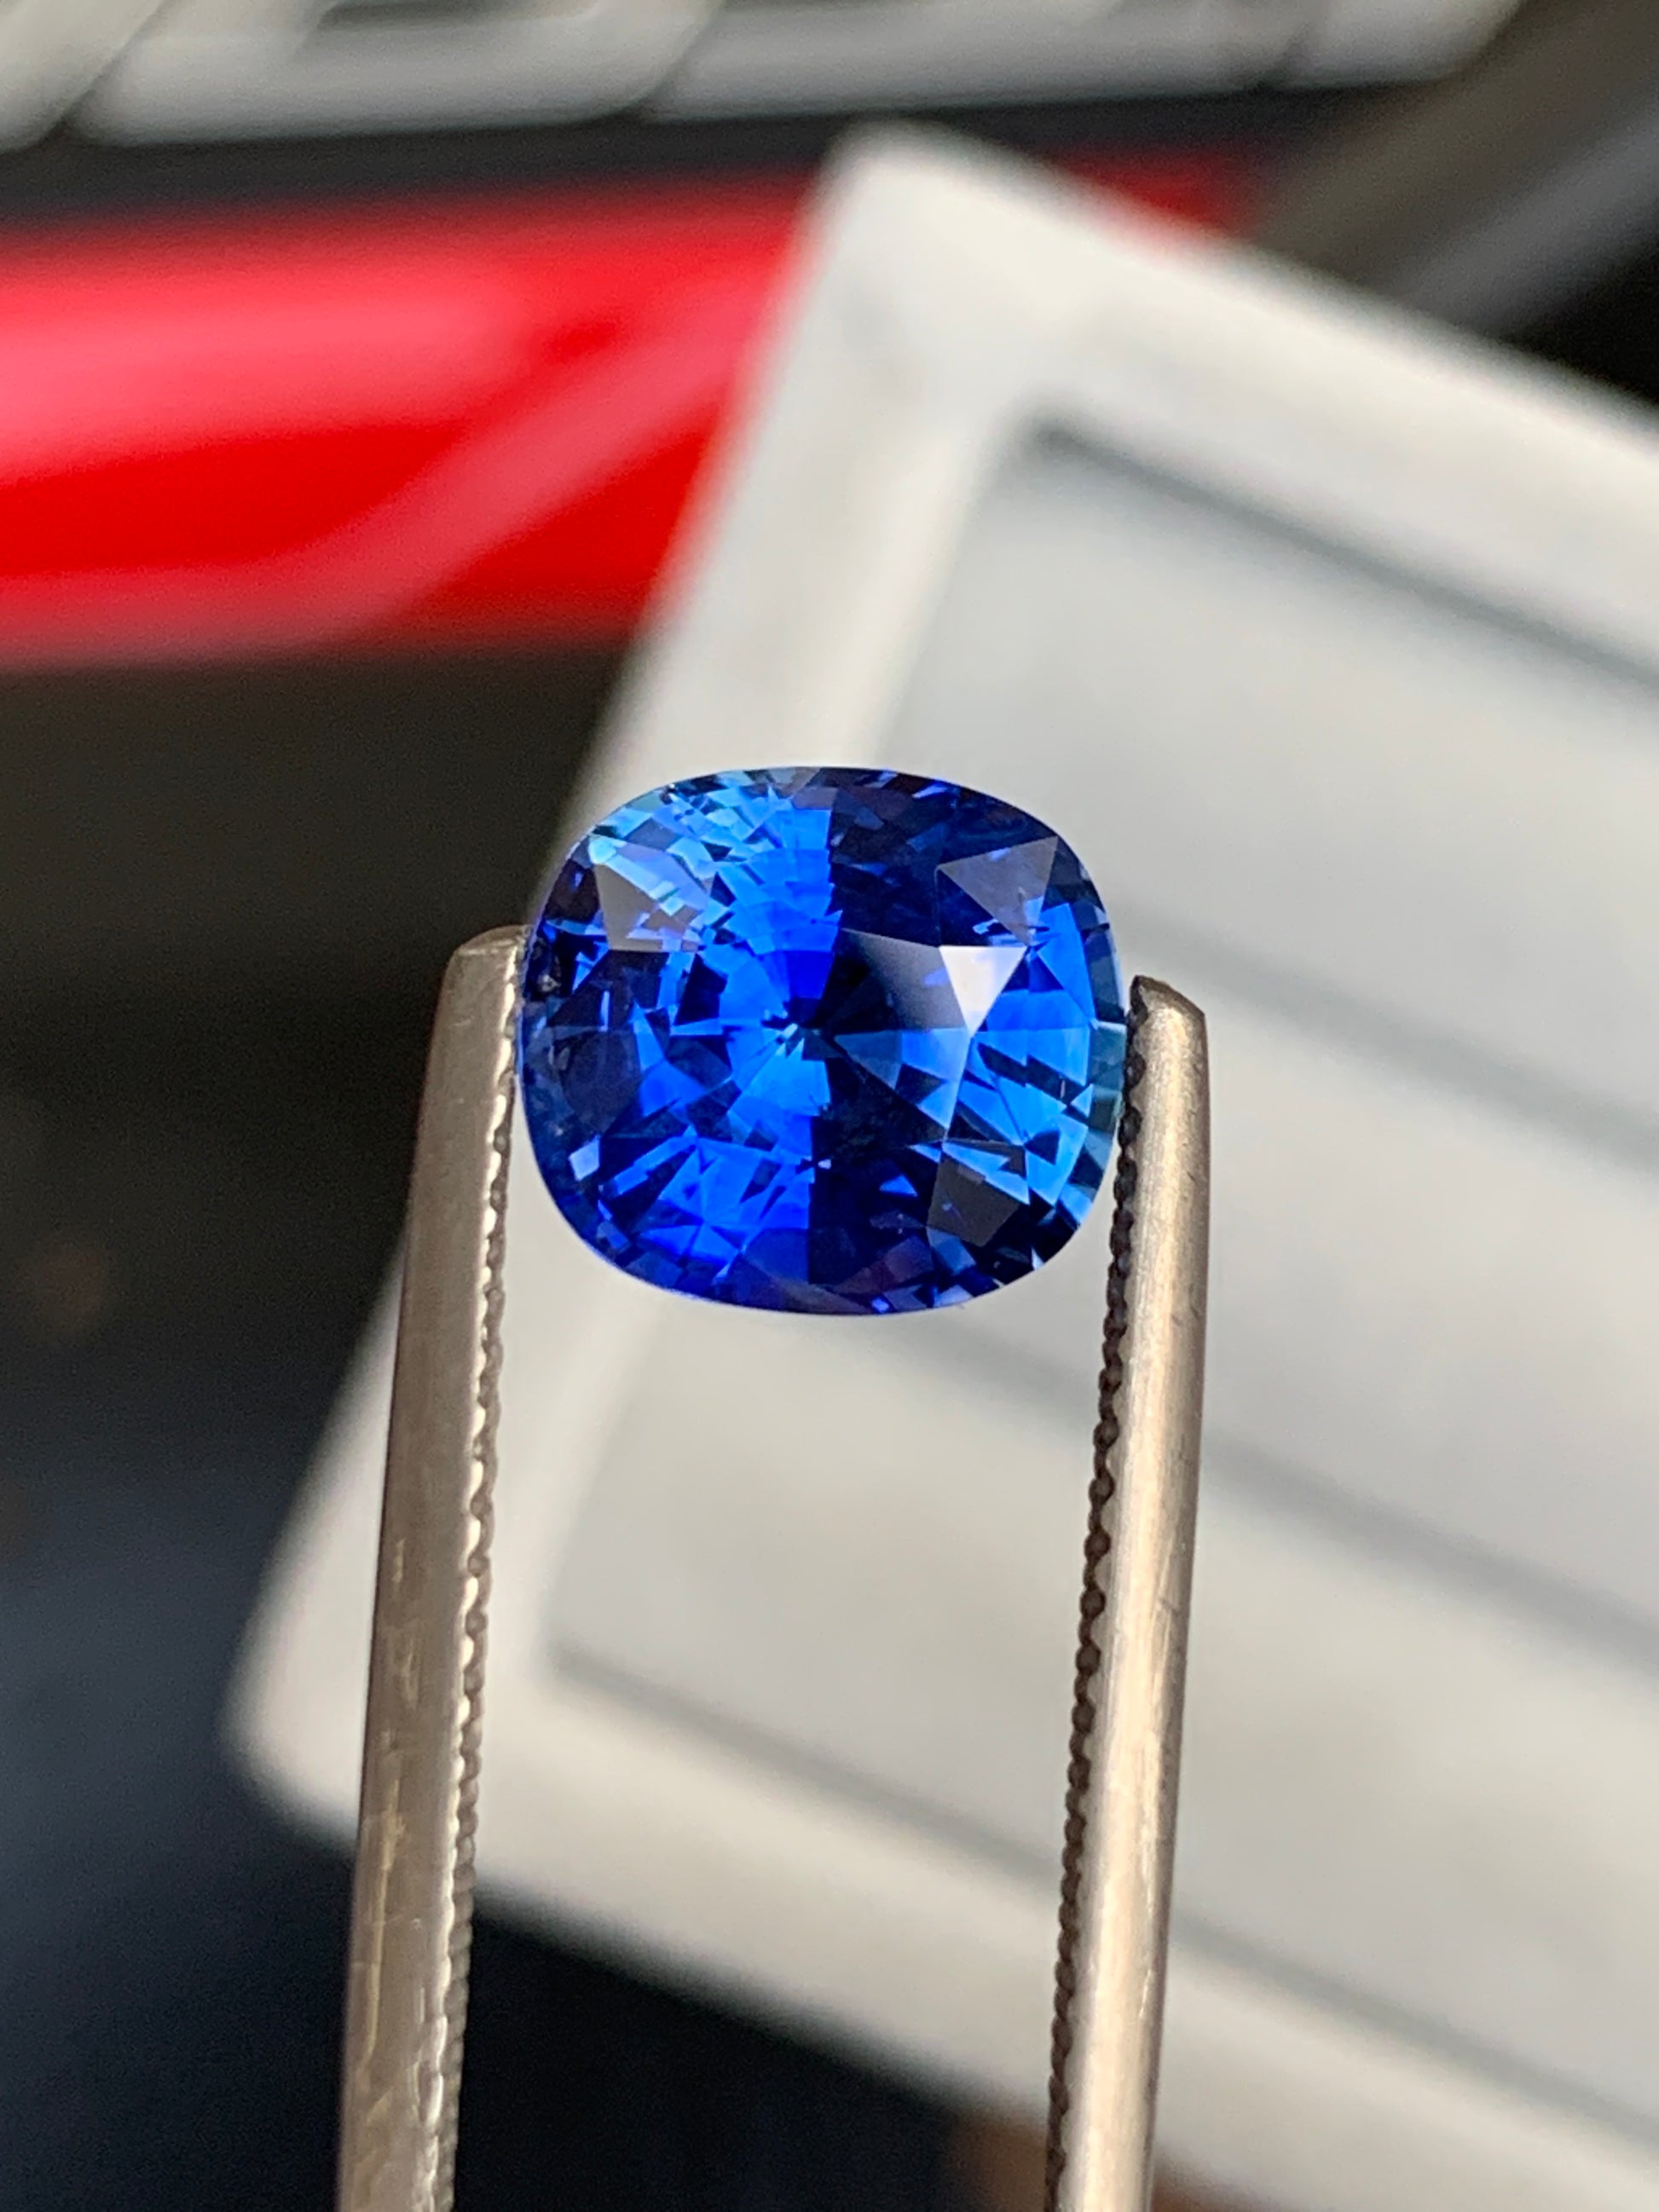 Saphir bleu taille coussin de 4,03ct avec pince